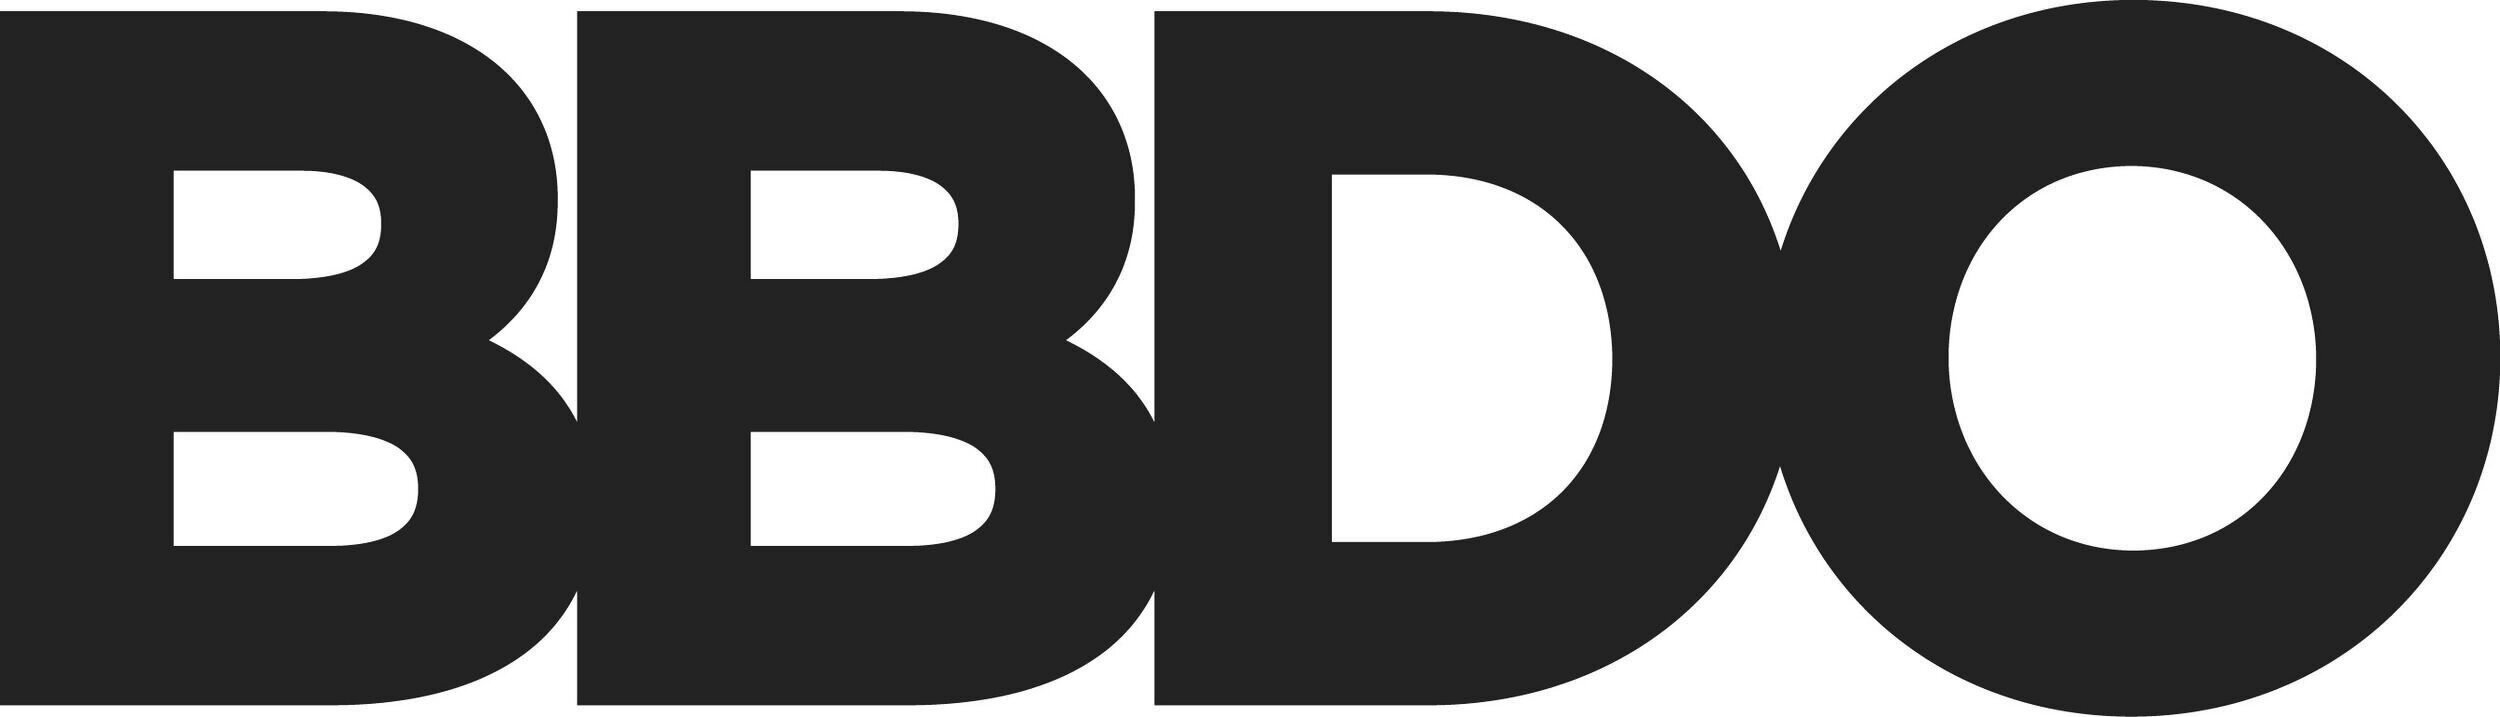 BBDO_Logo_1.jpg